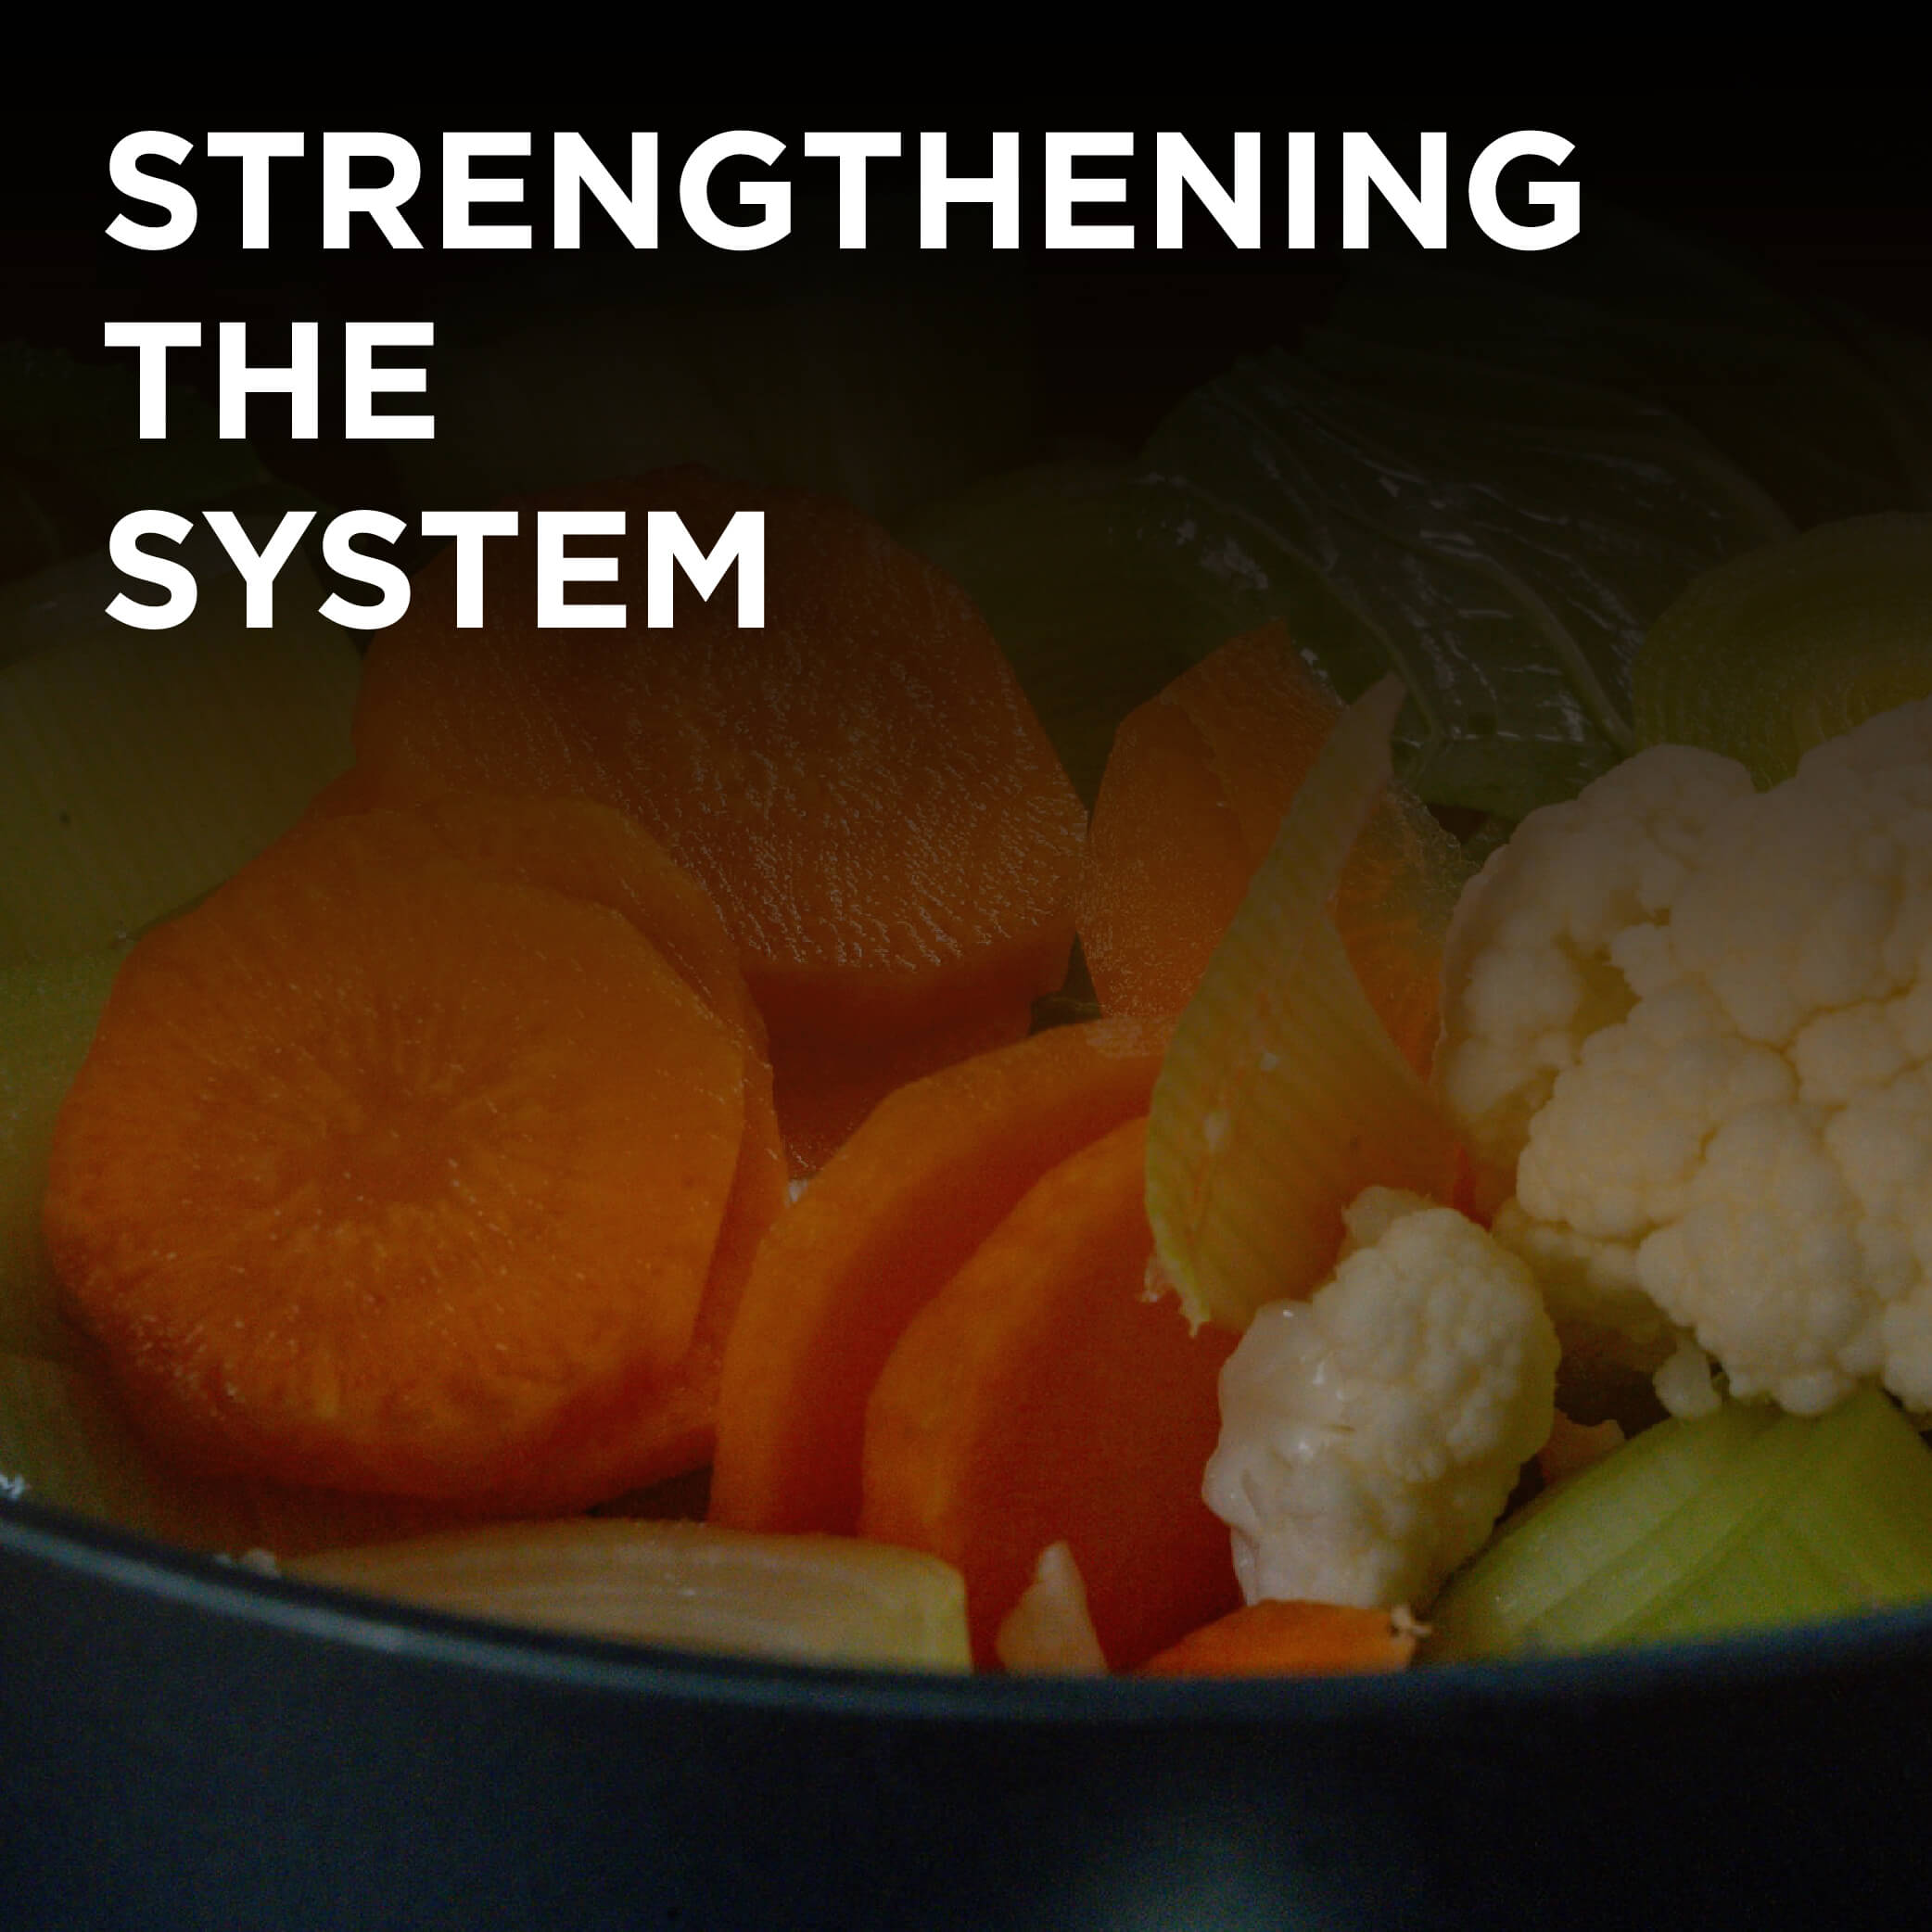  Strengthening the system